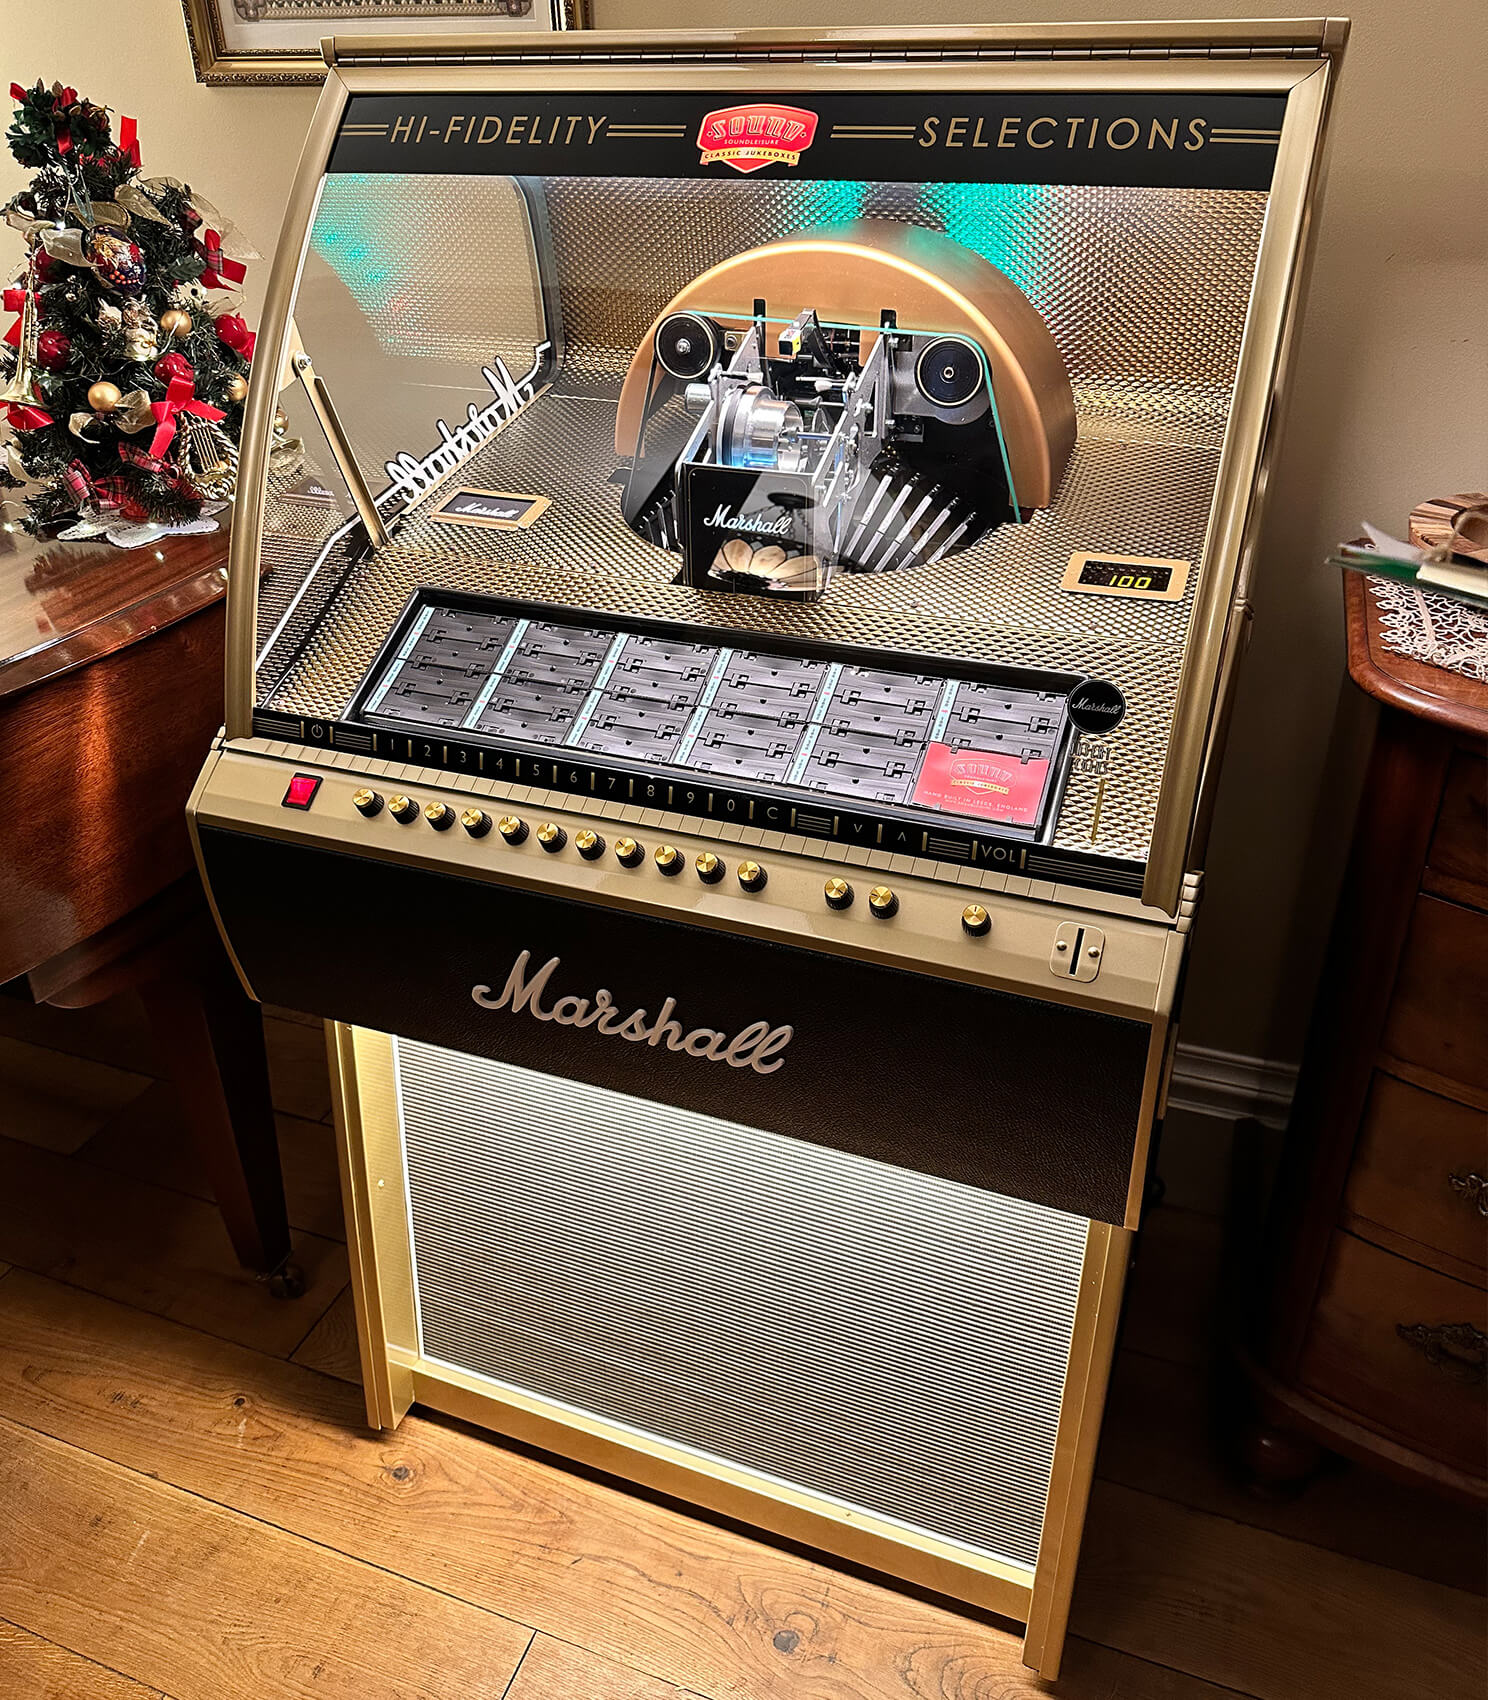 Sound Leisure Marshall Rocket Vinyl Jukebox Liberty